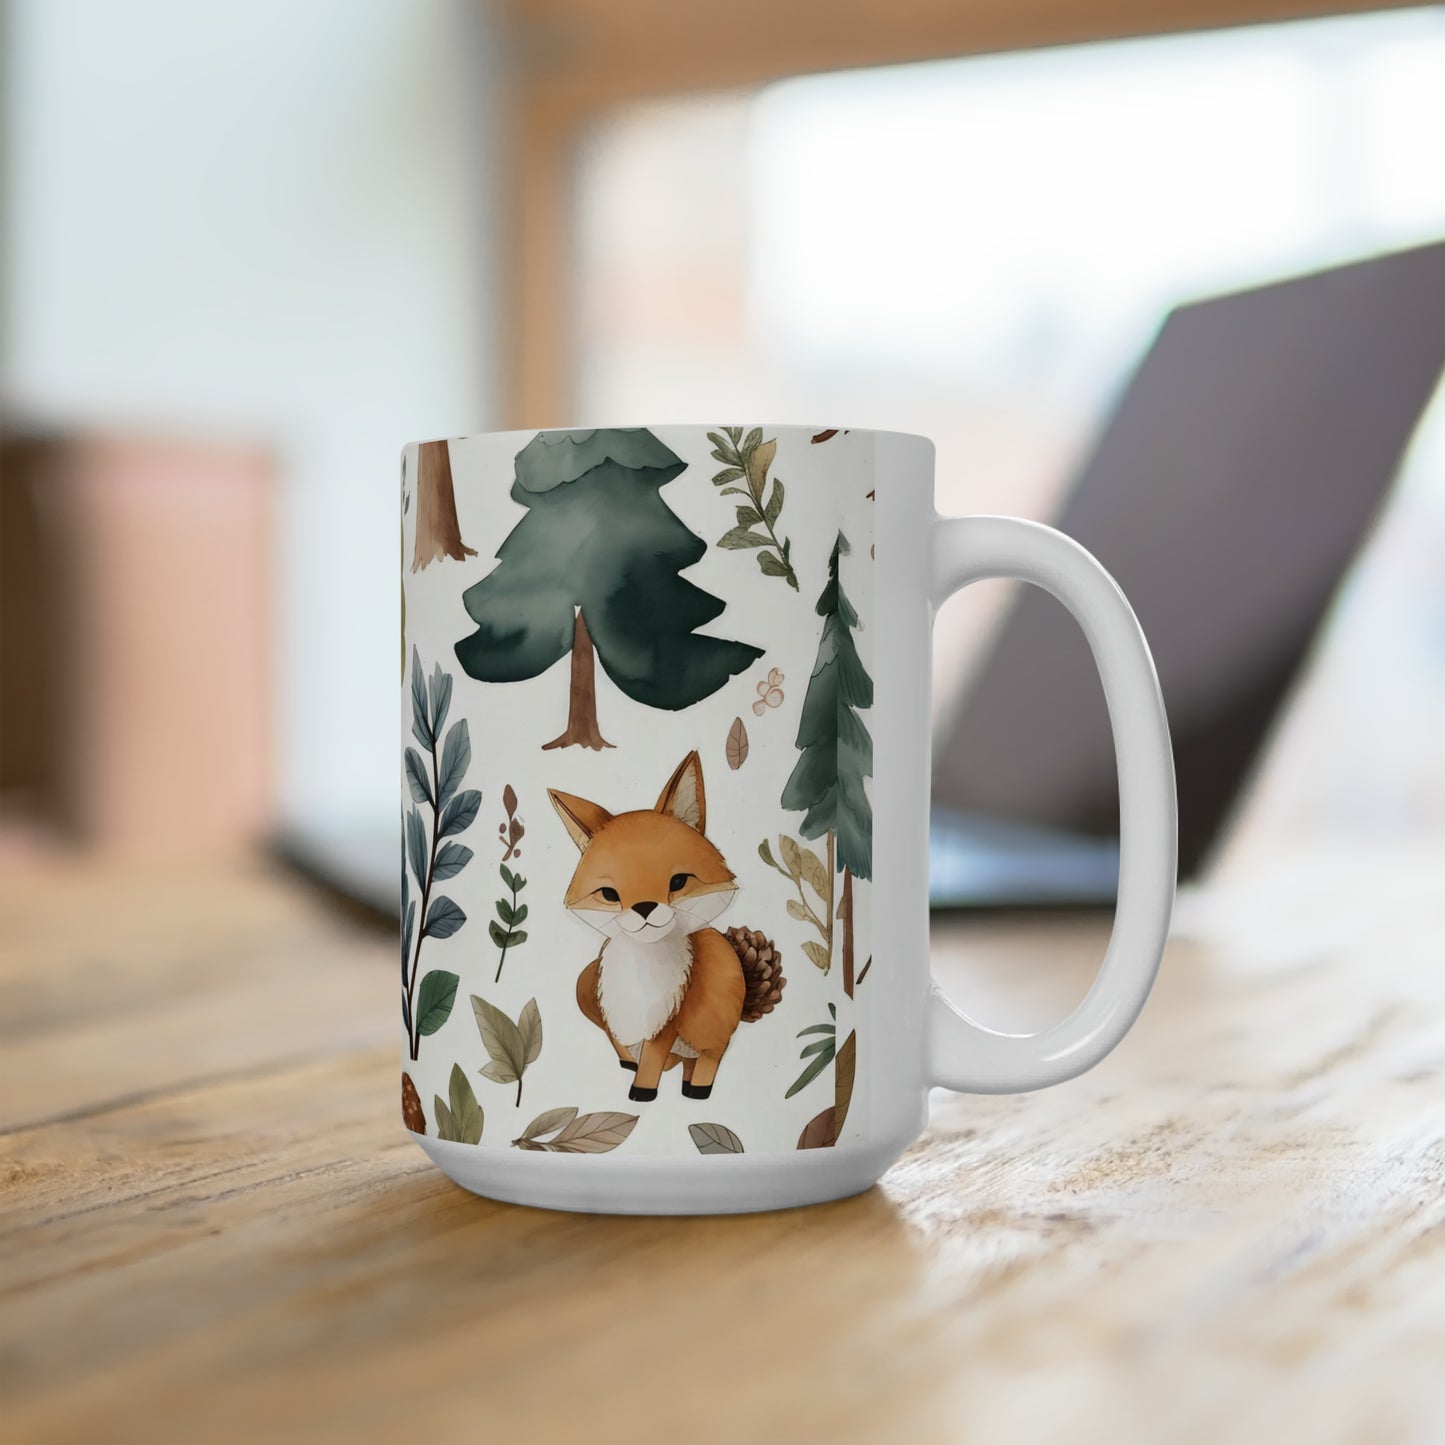 Ceramic Mug 15oz - Woodland Animals on desk